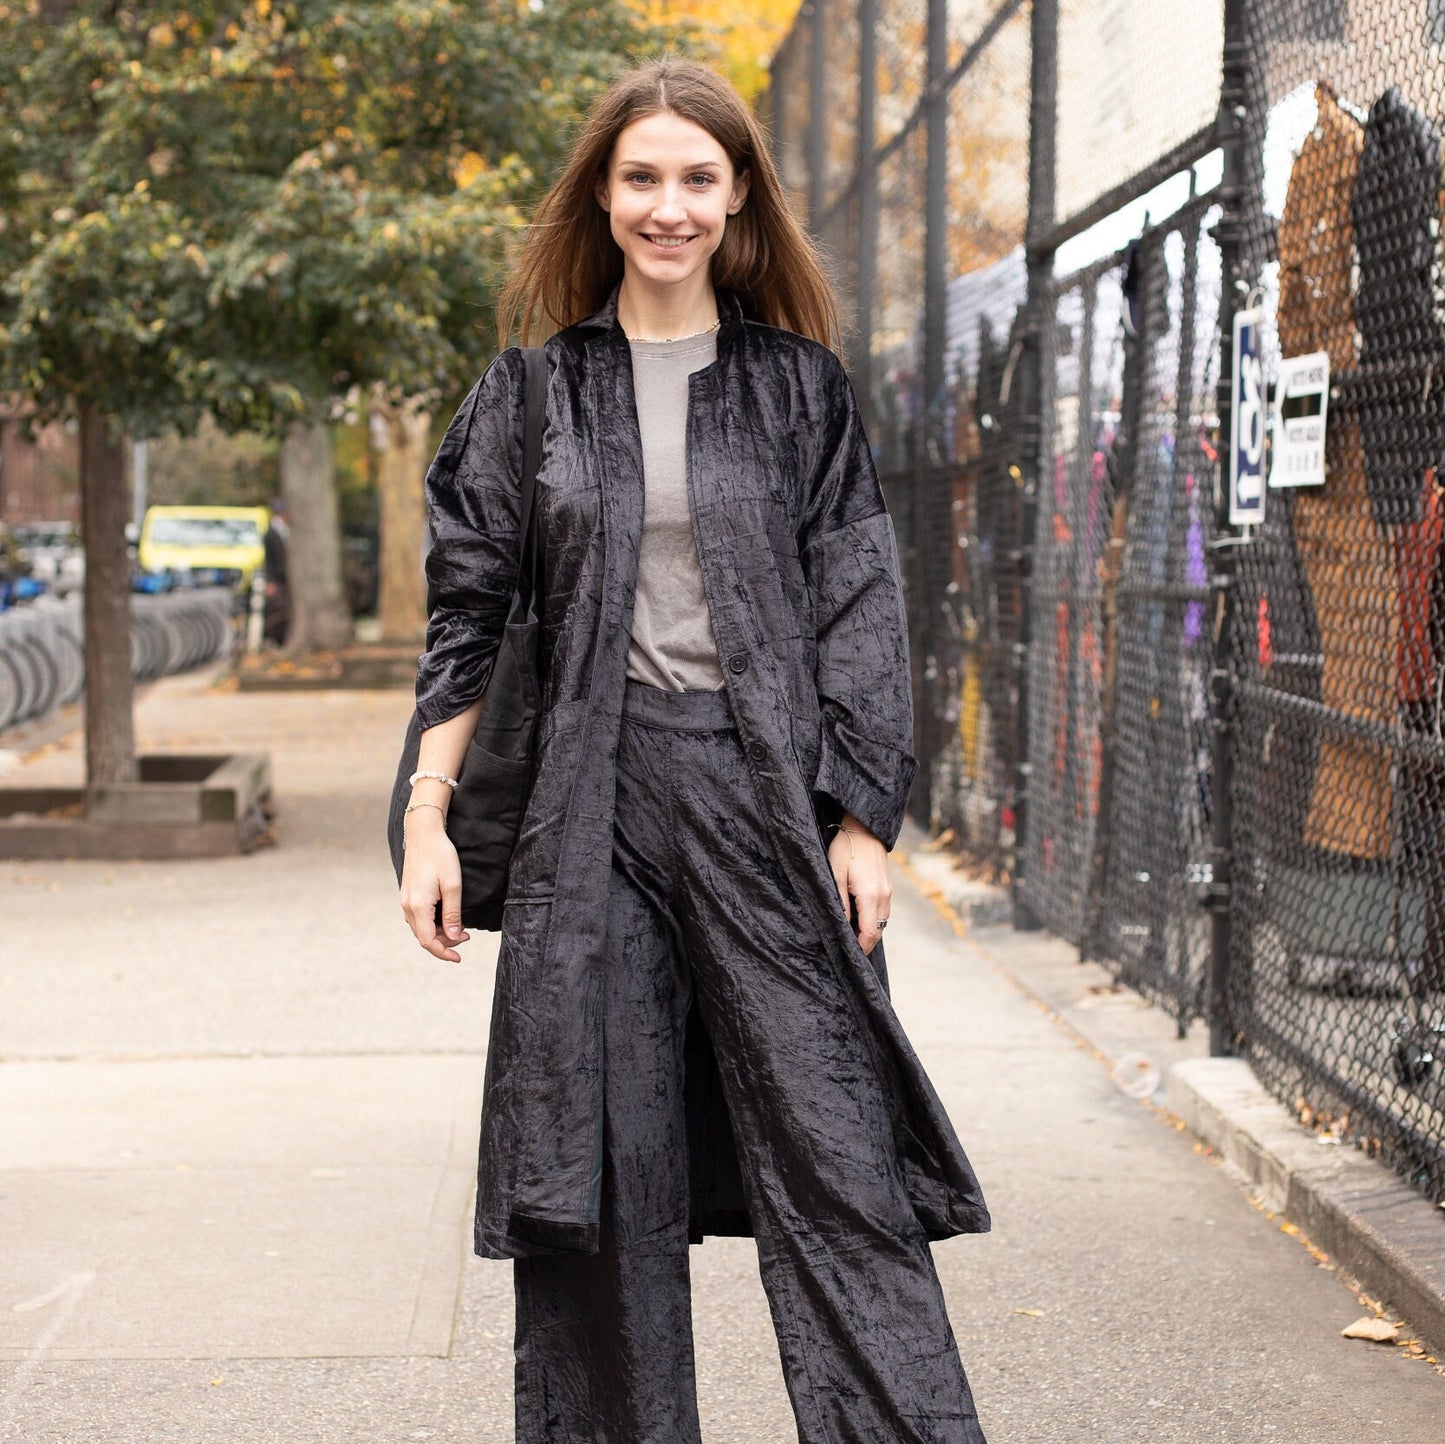 Young woman standing confidently, elegantly showcasing the Black Velvet Long Duster Jacket - Stylish Fall Coat and Velvet Cardigan for Women.